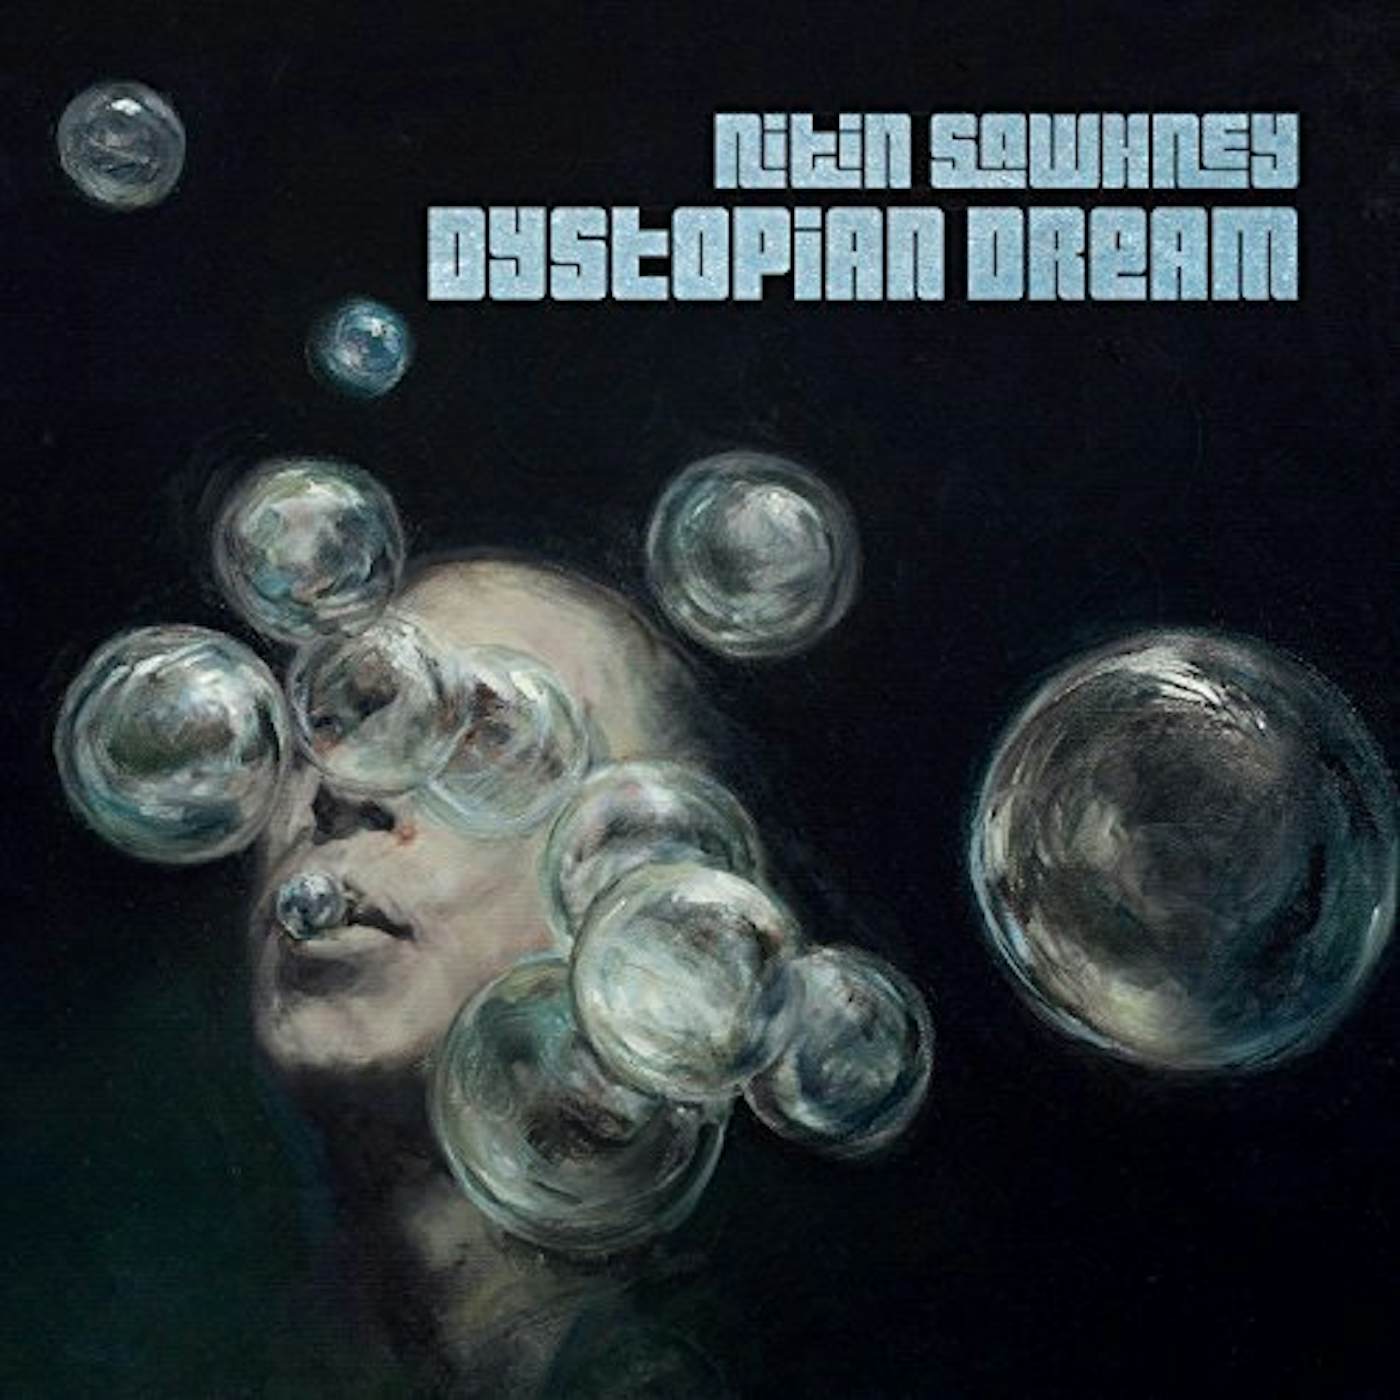 Nitin Sawhney DYSTOPIAN DREAM Vinyl Record - UK Release